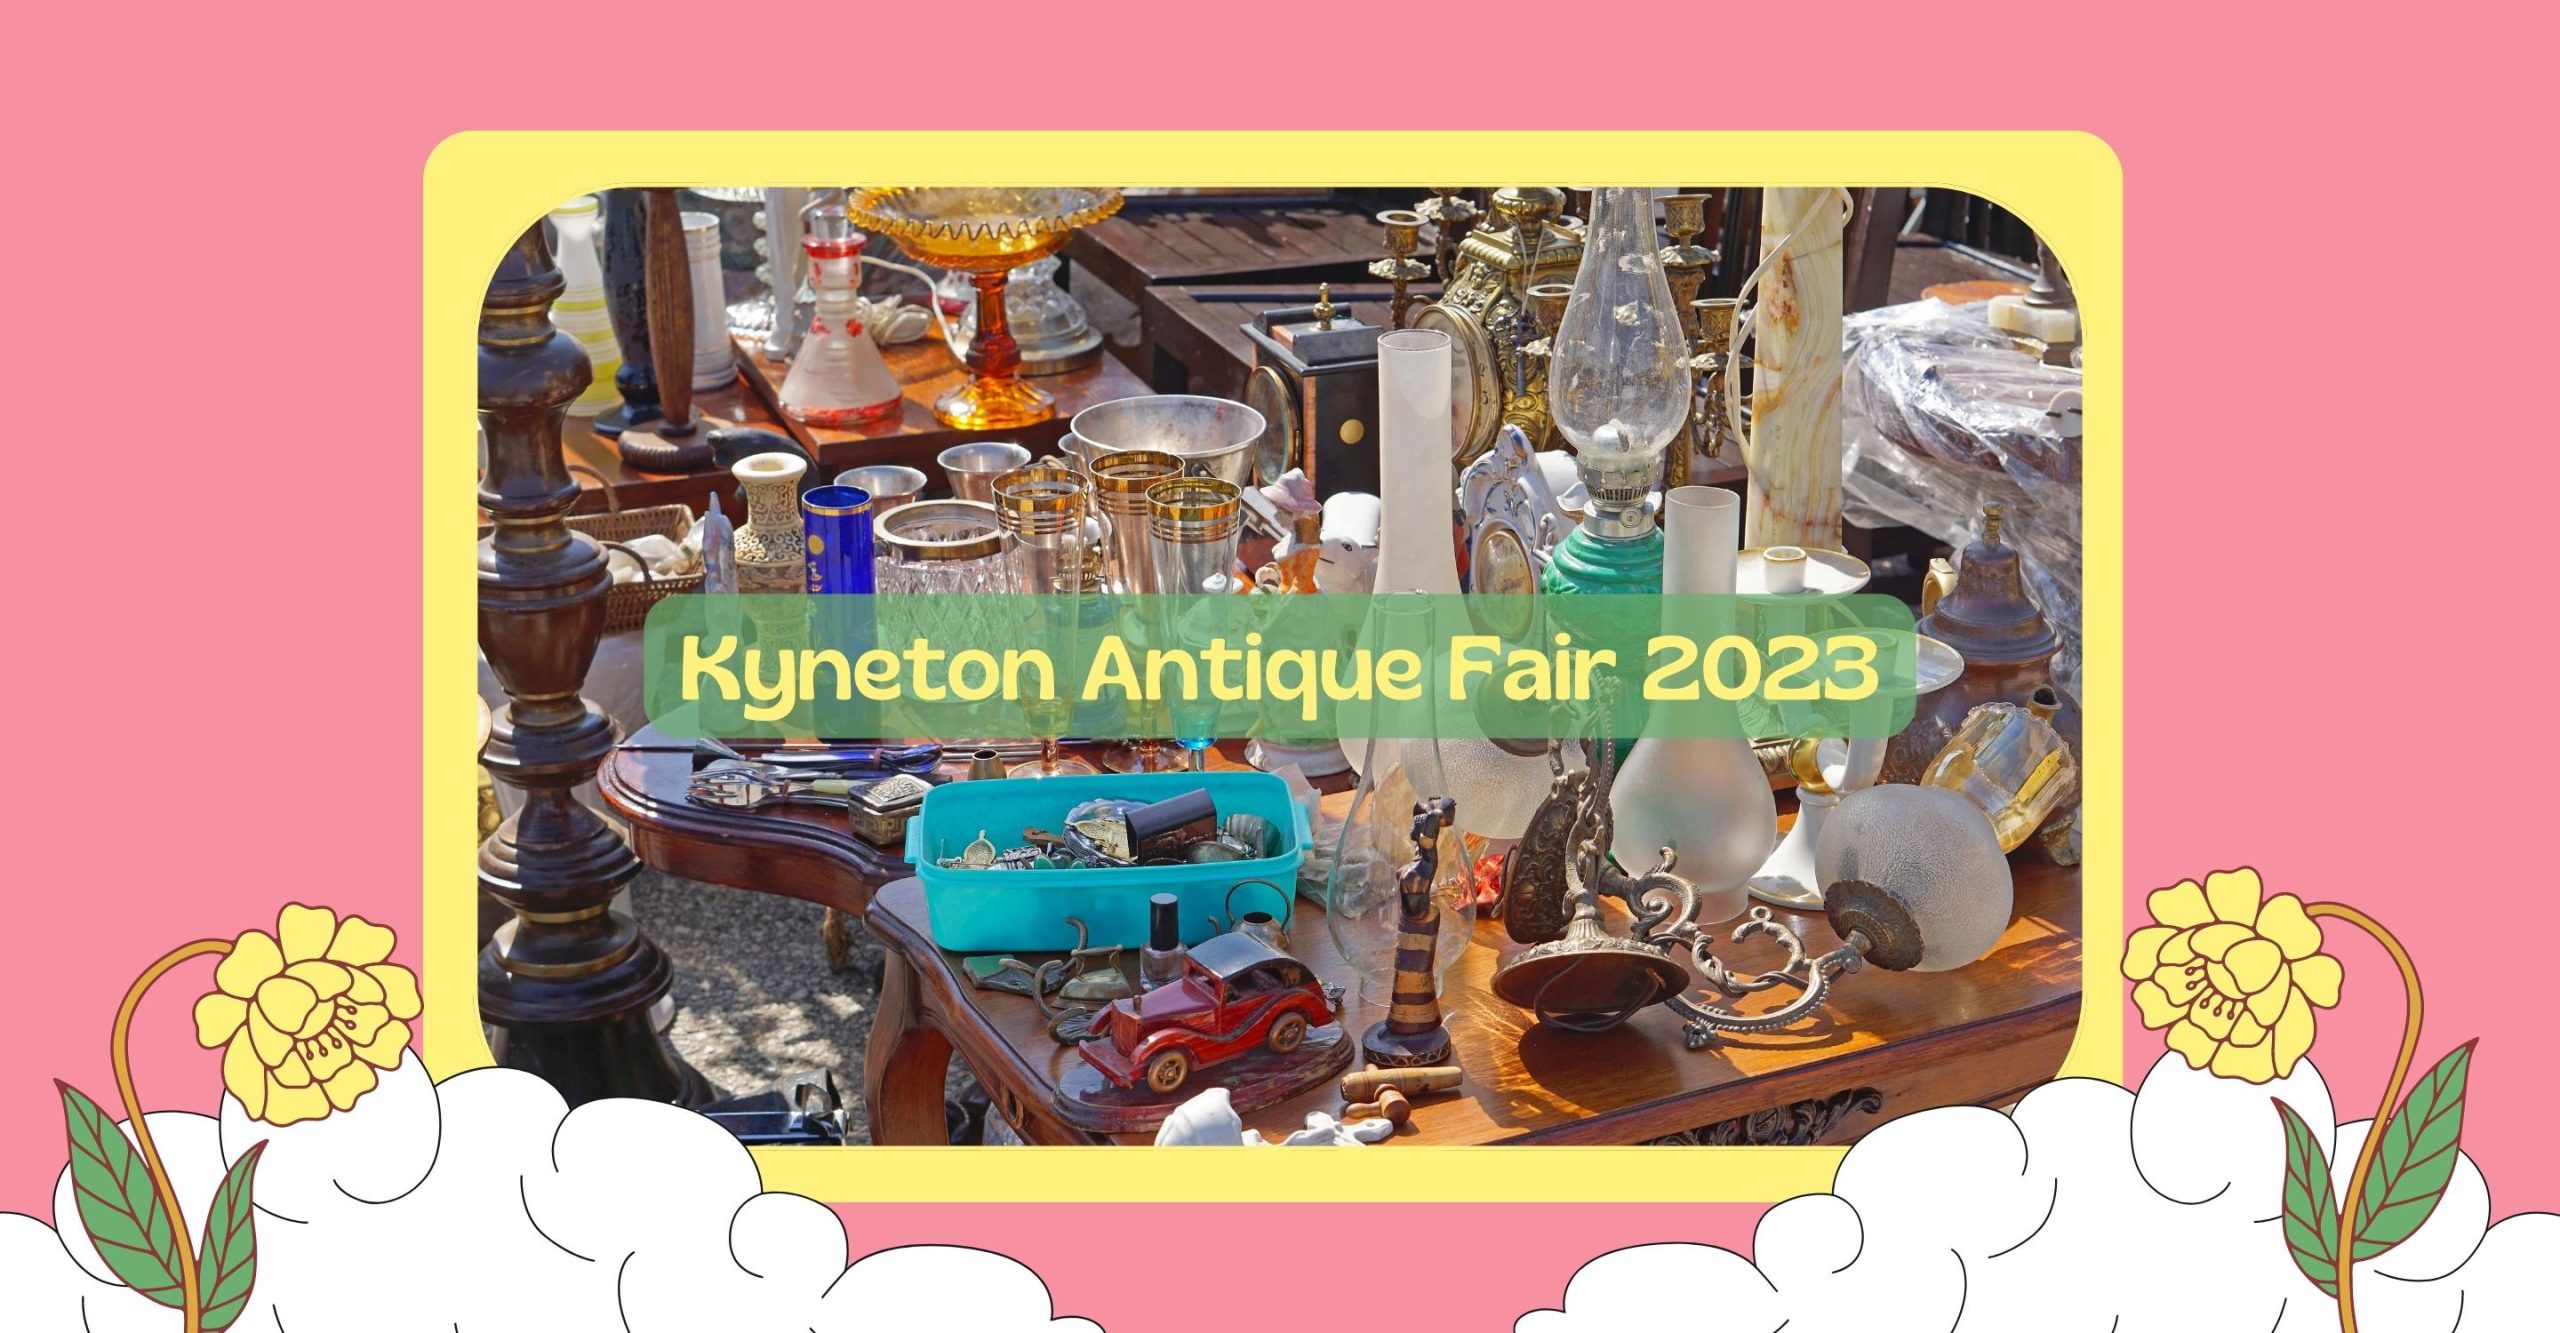 Kyneton Antique Fair